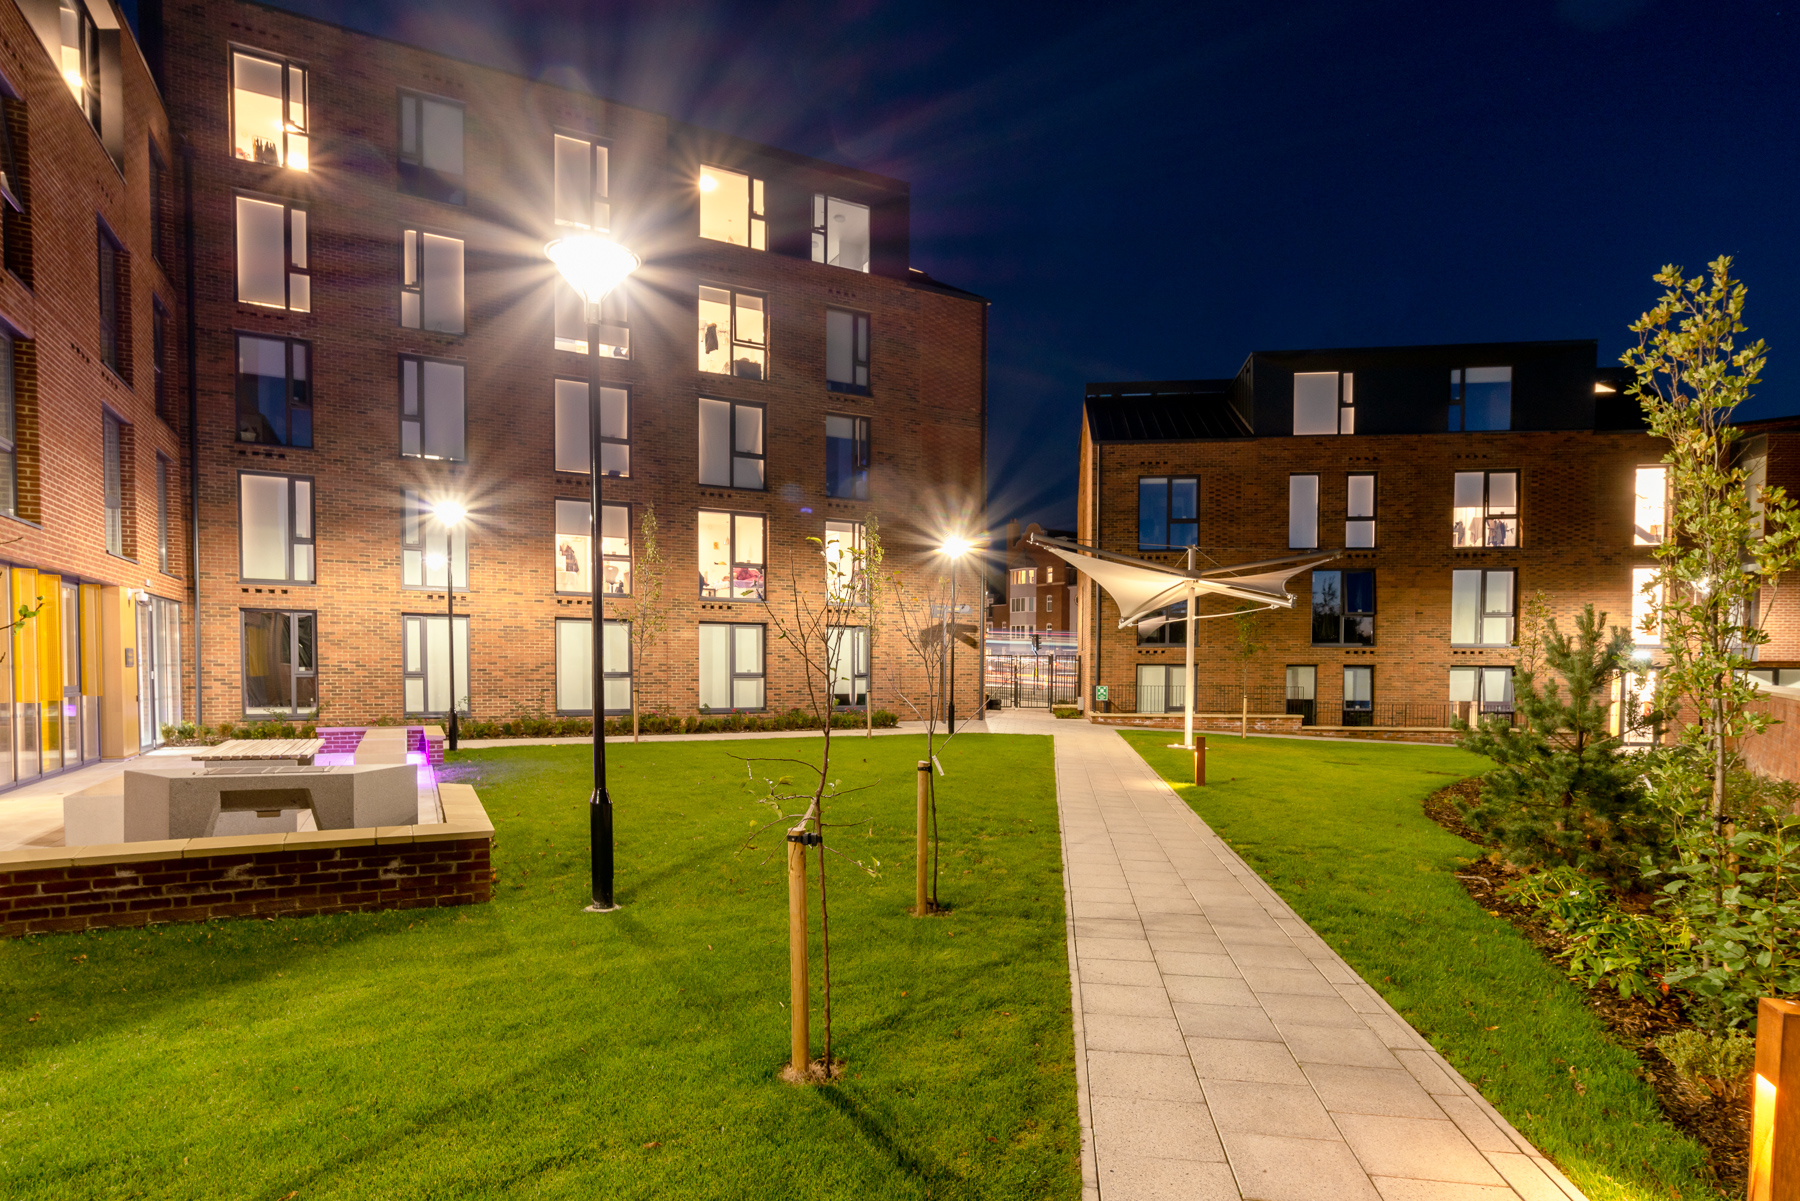  Student Accommodation | GWP Architecture | Durham, UK 